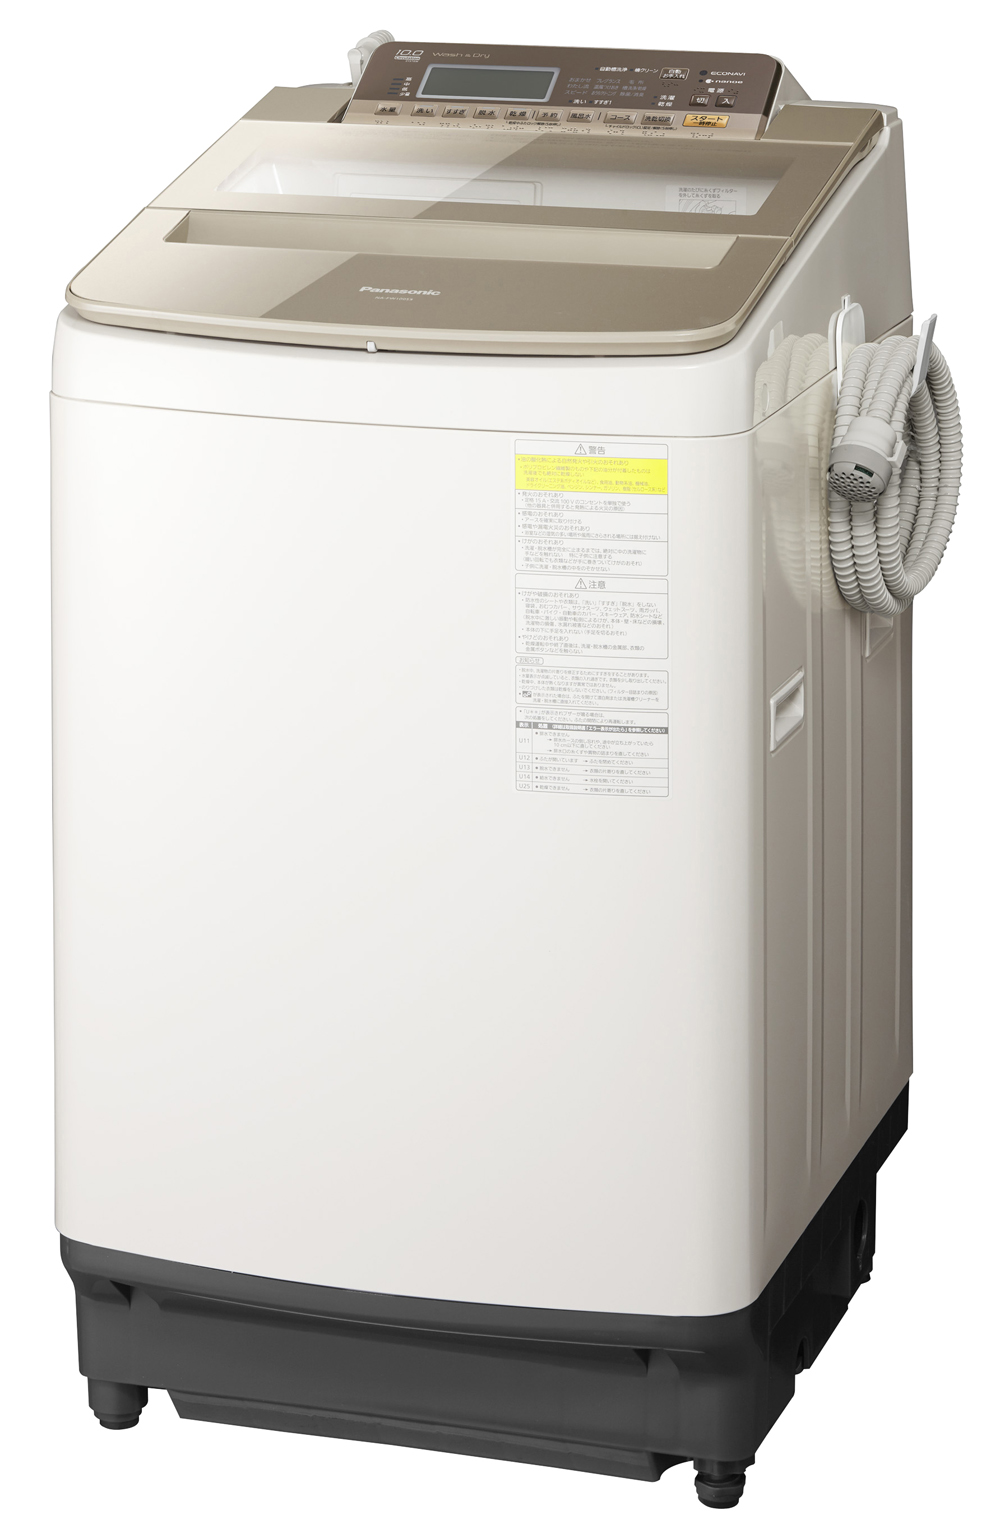 縦型洗濯乾燥機『NA-FW100S5』